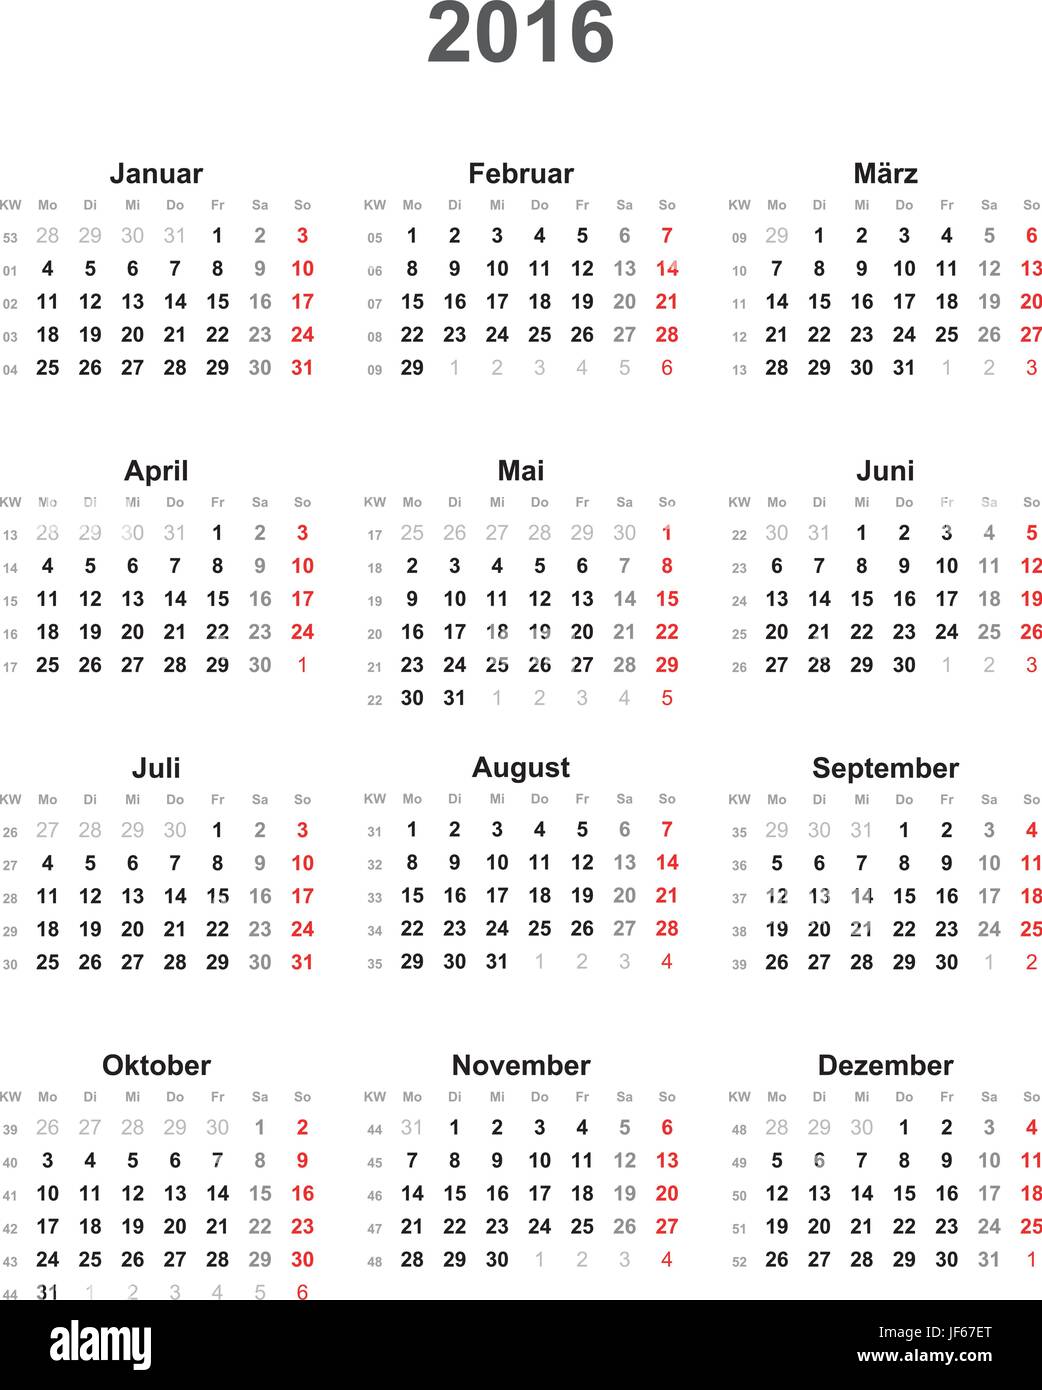 Kalender mit kalenderwochen hi-res stock photography and images - Alamy